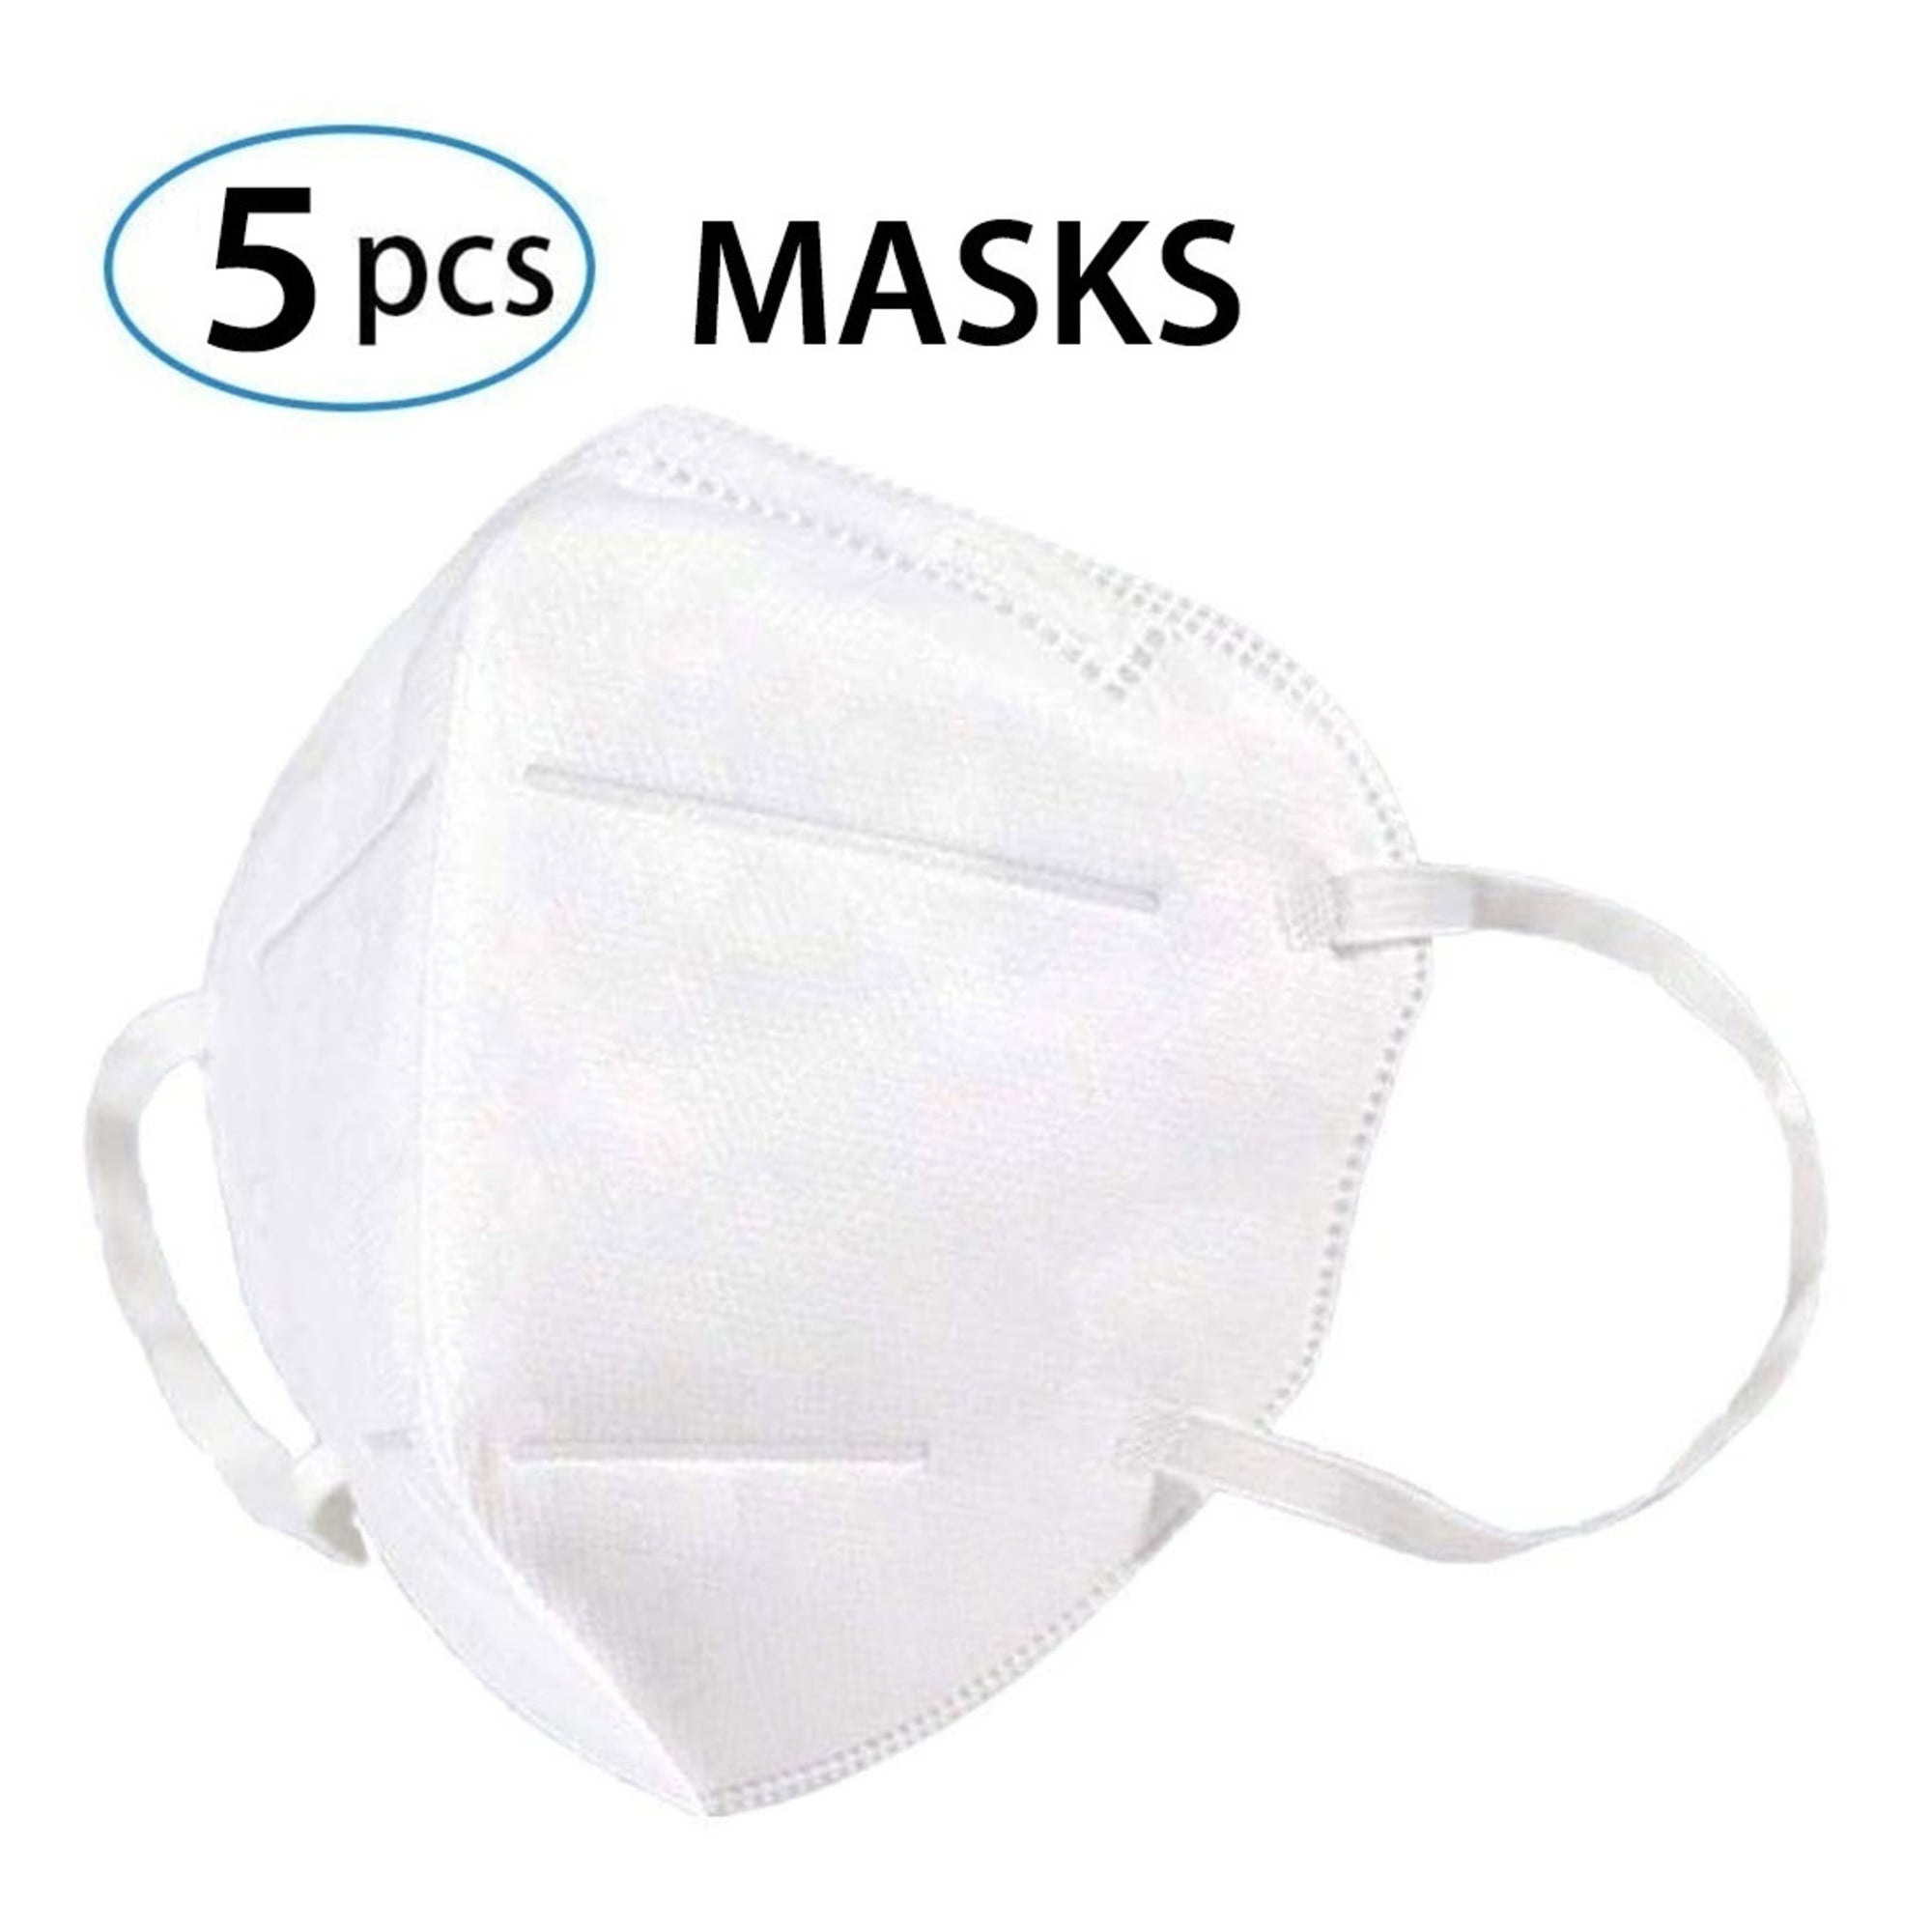 Childrens KN95 Face Mask - White